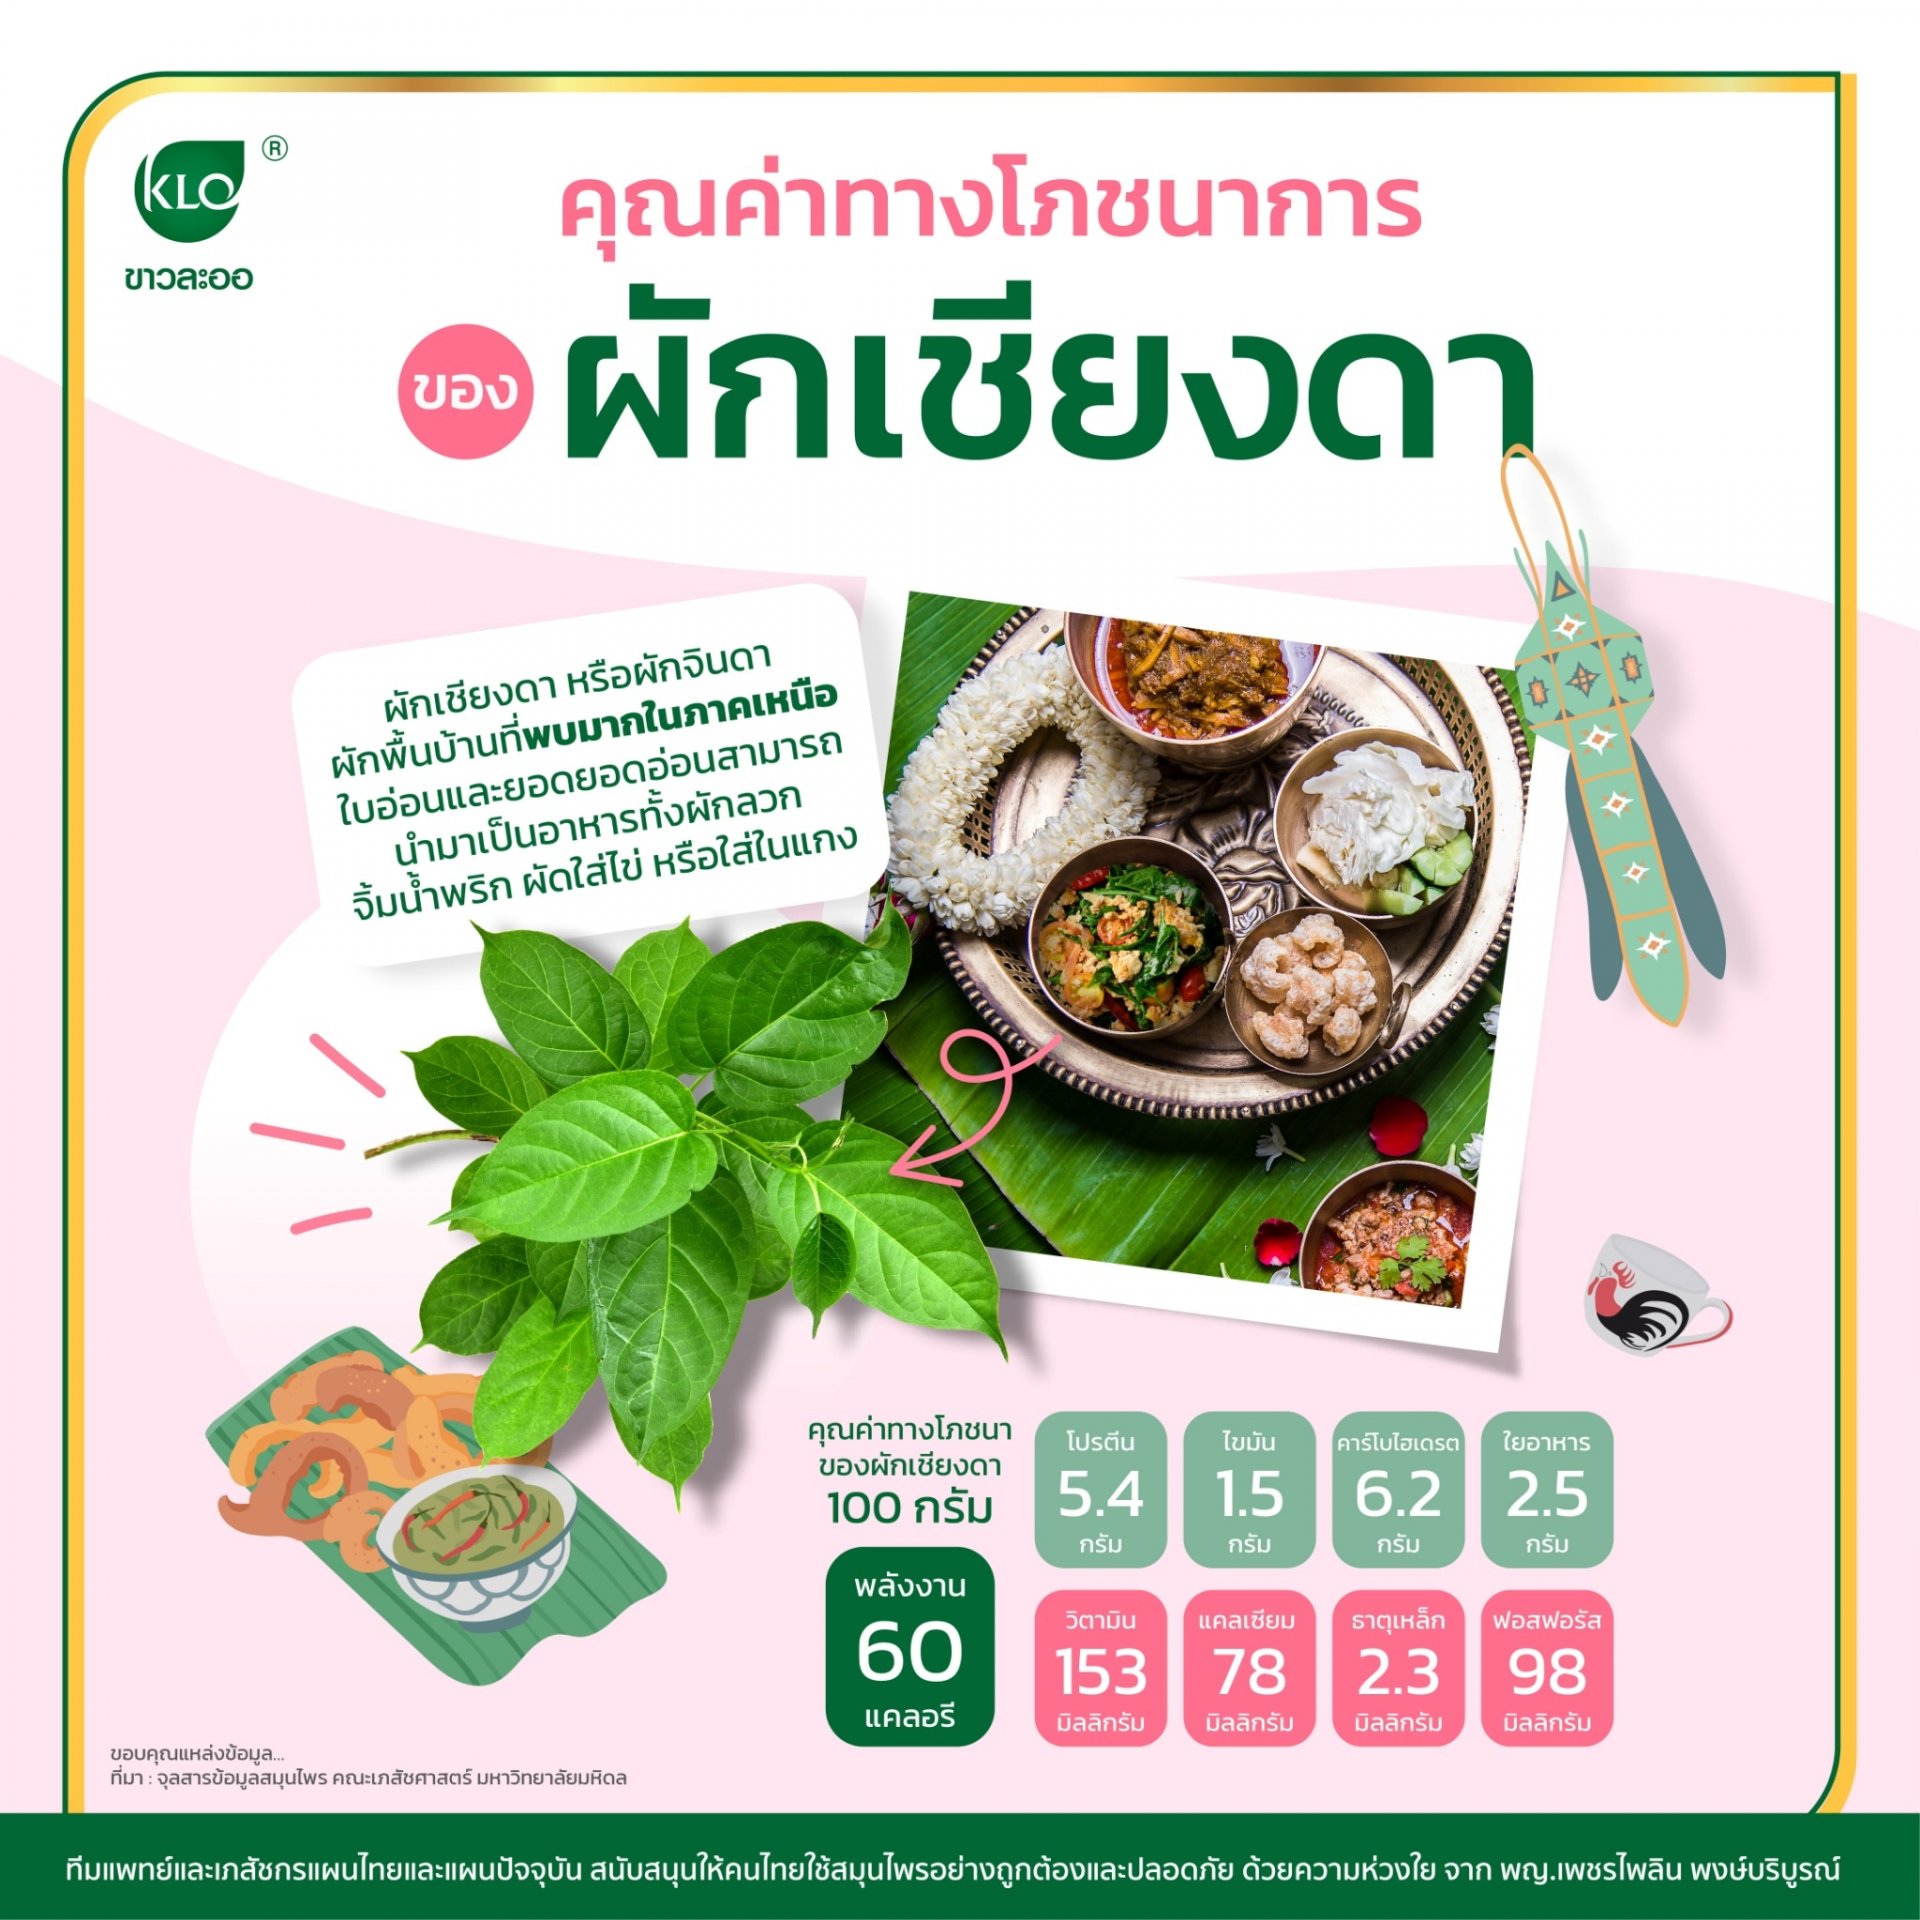 Nutritional value of Chiang Da vegetables